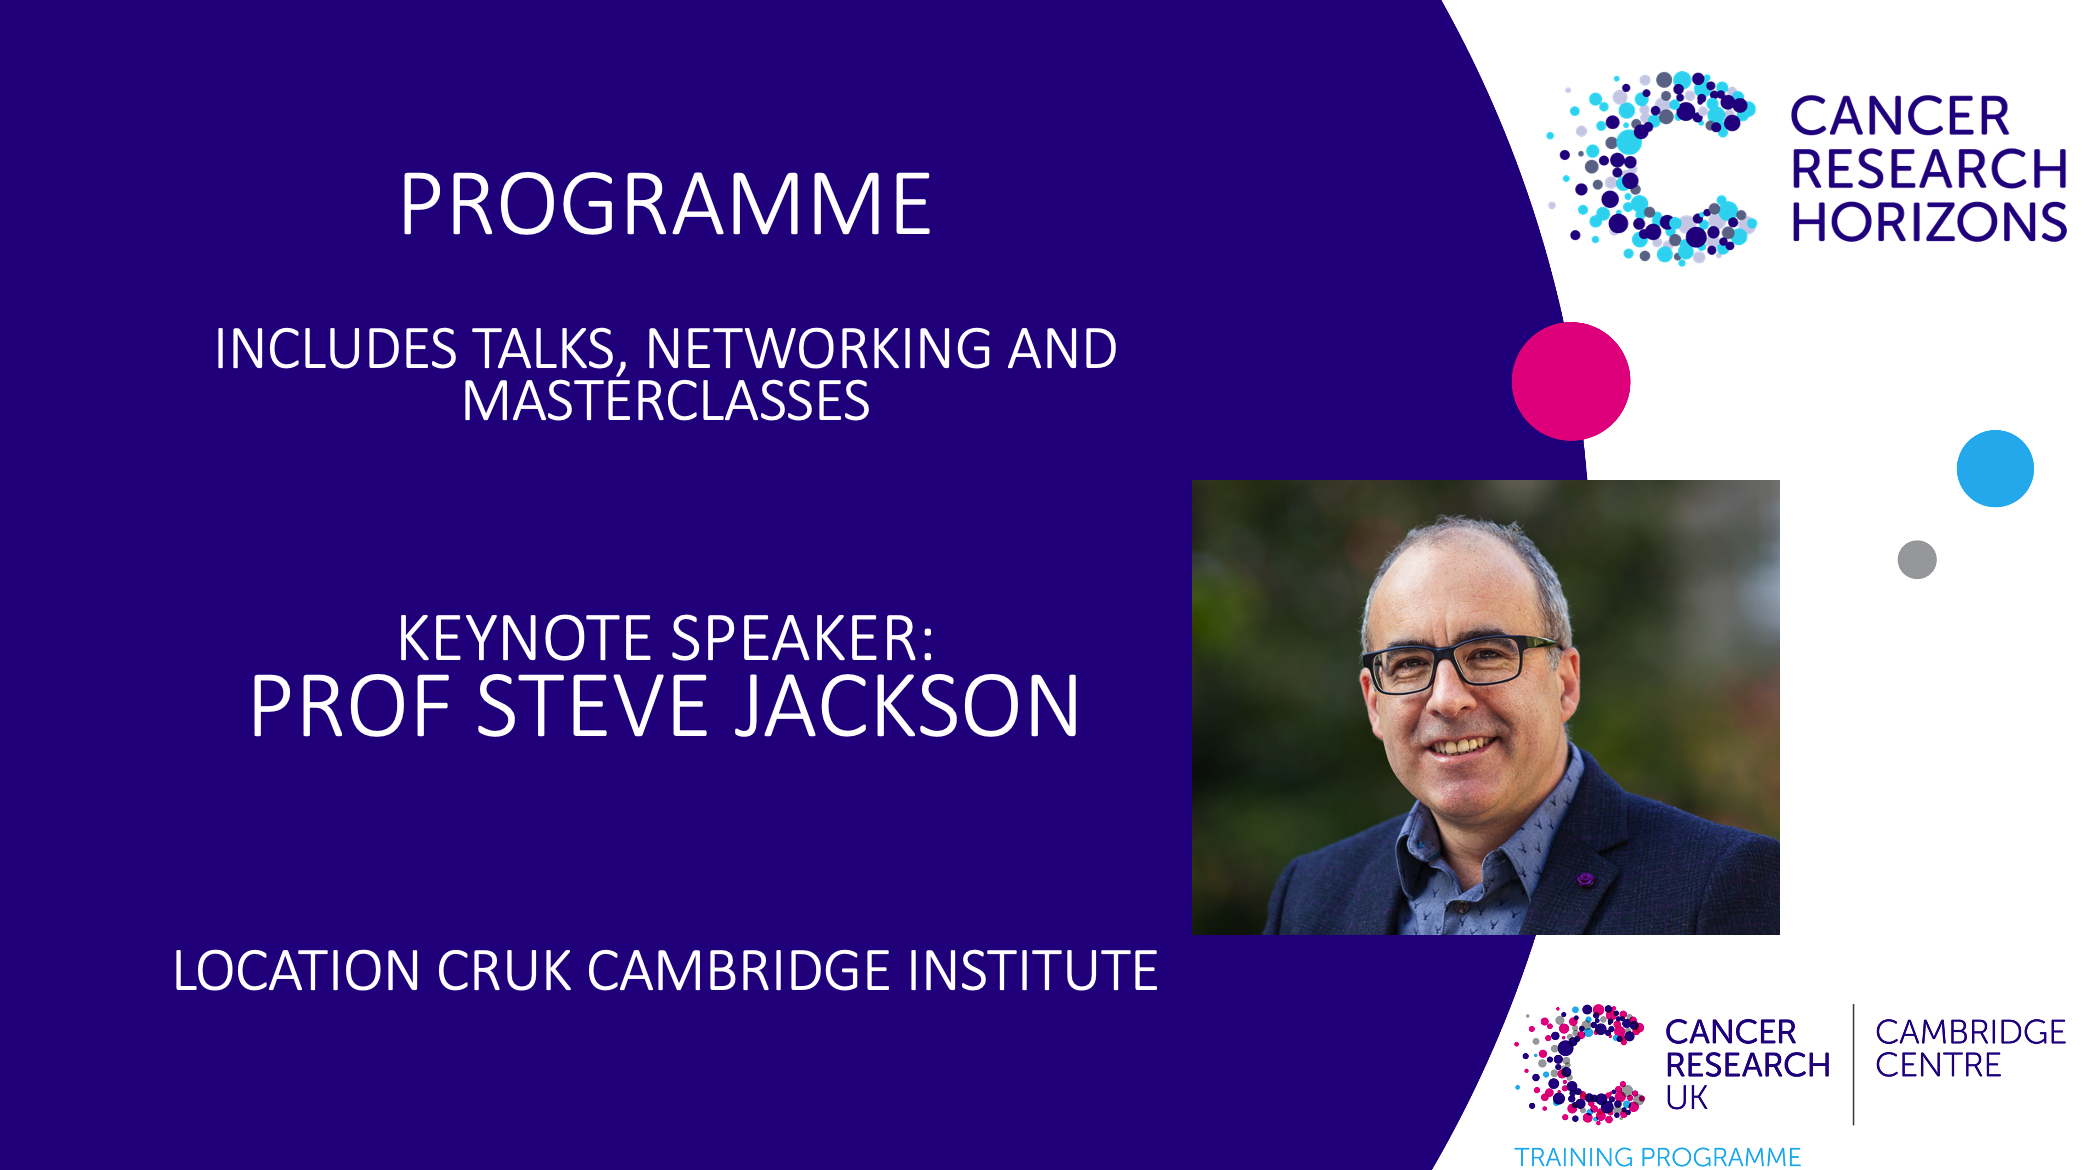 Key note speaker Steve Jackson and location CRUK Cambridge Institute